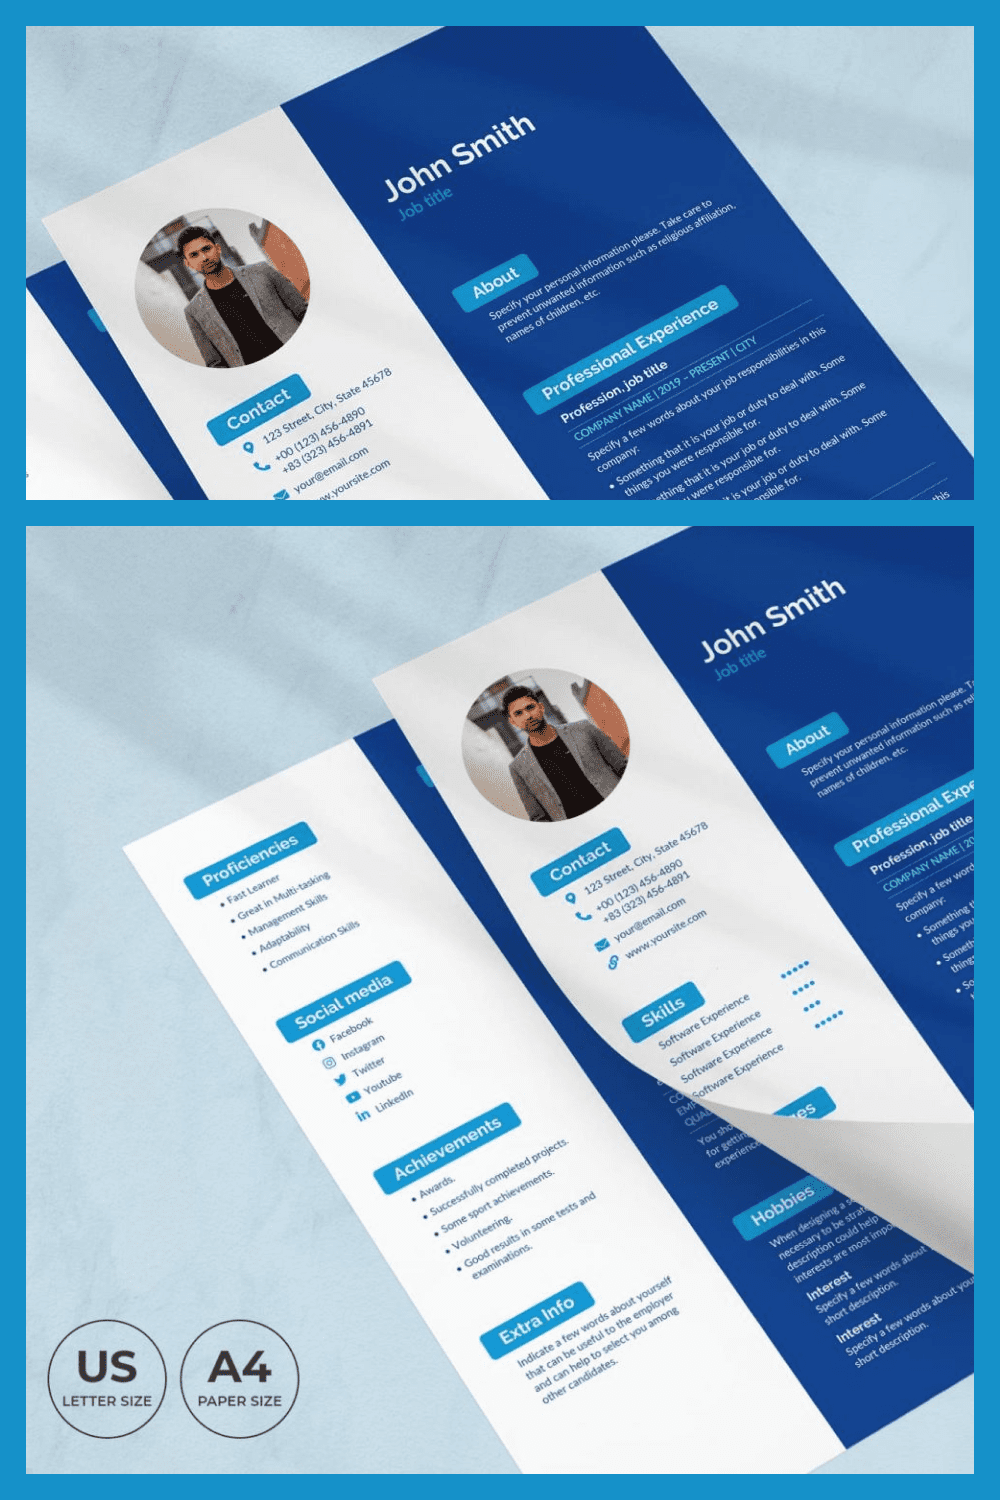 SEO Agency CV Resume Template - MasterBundles - Pinterest Collage Image.